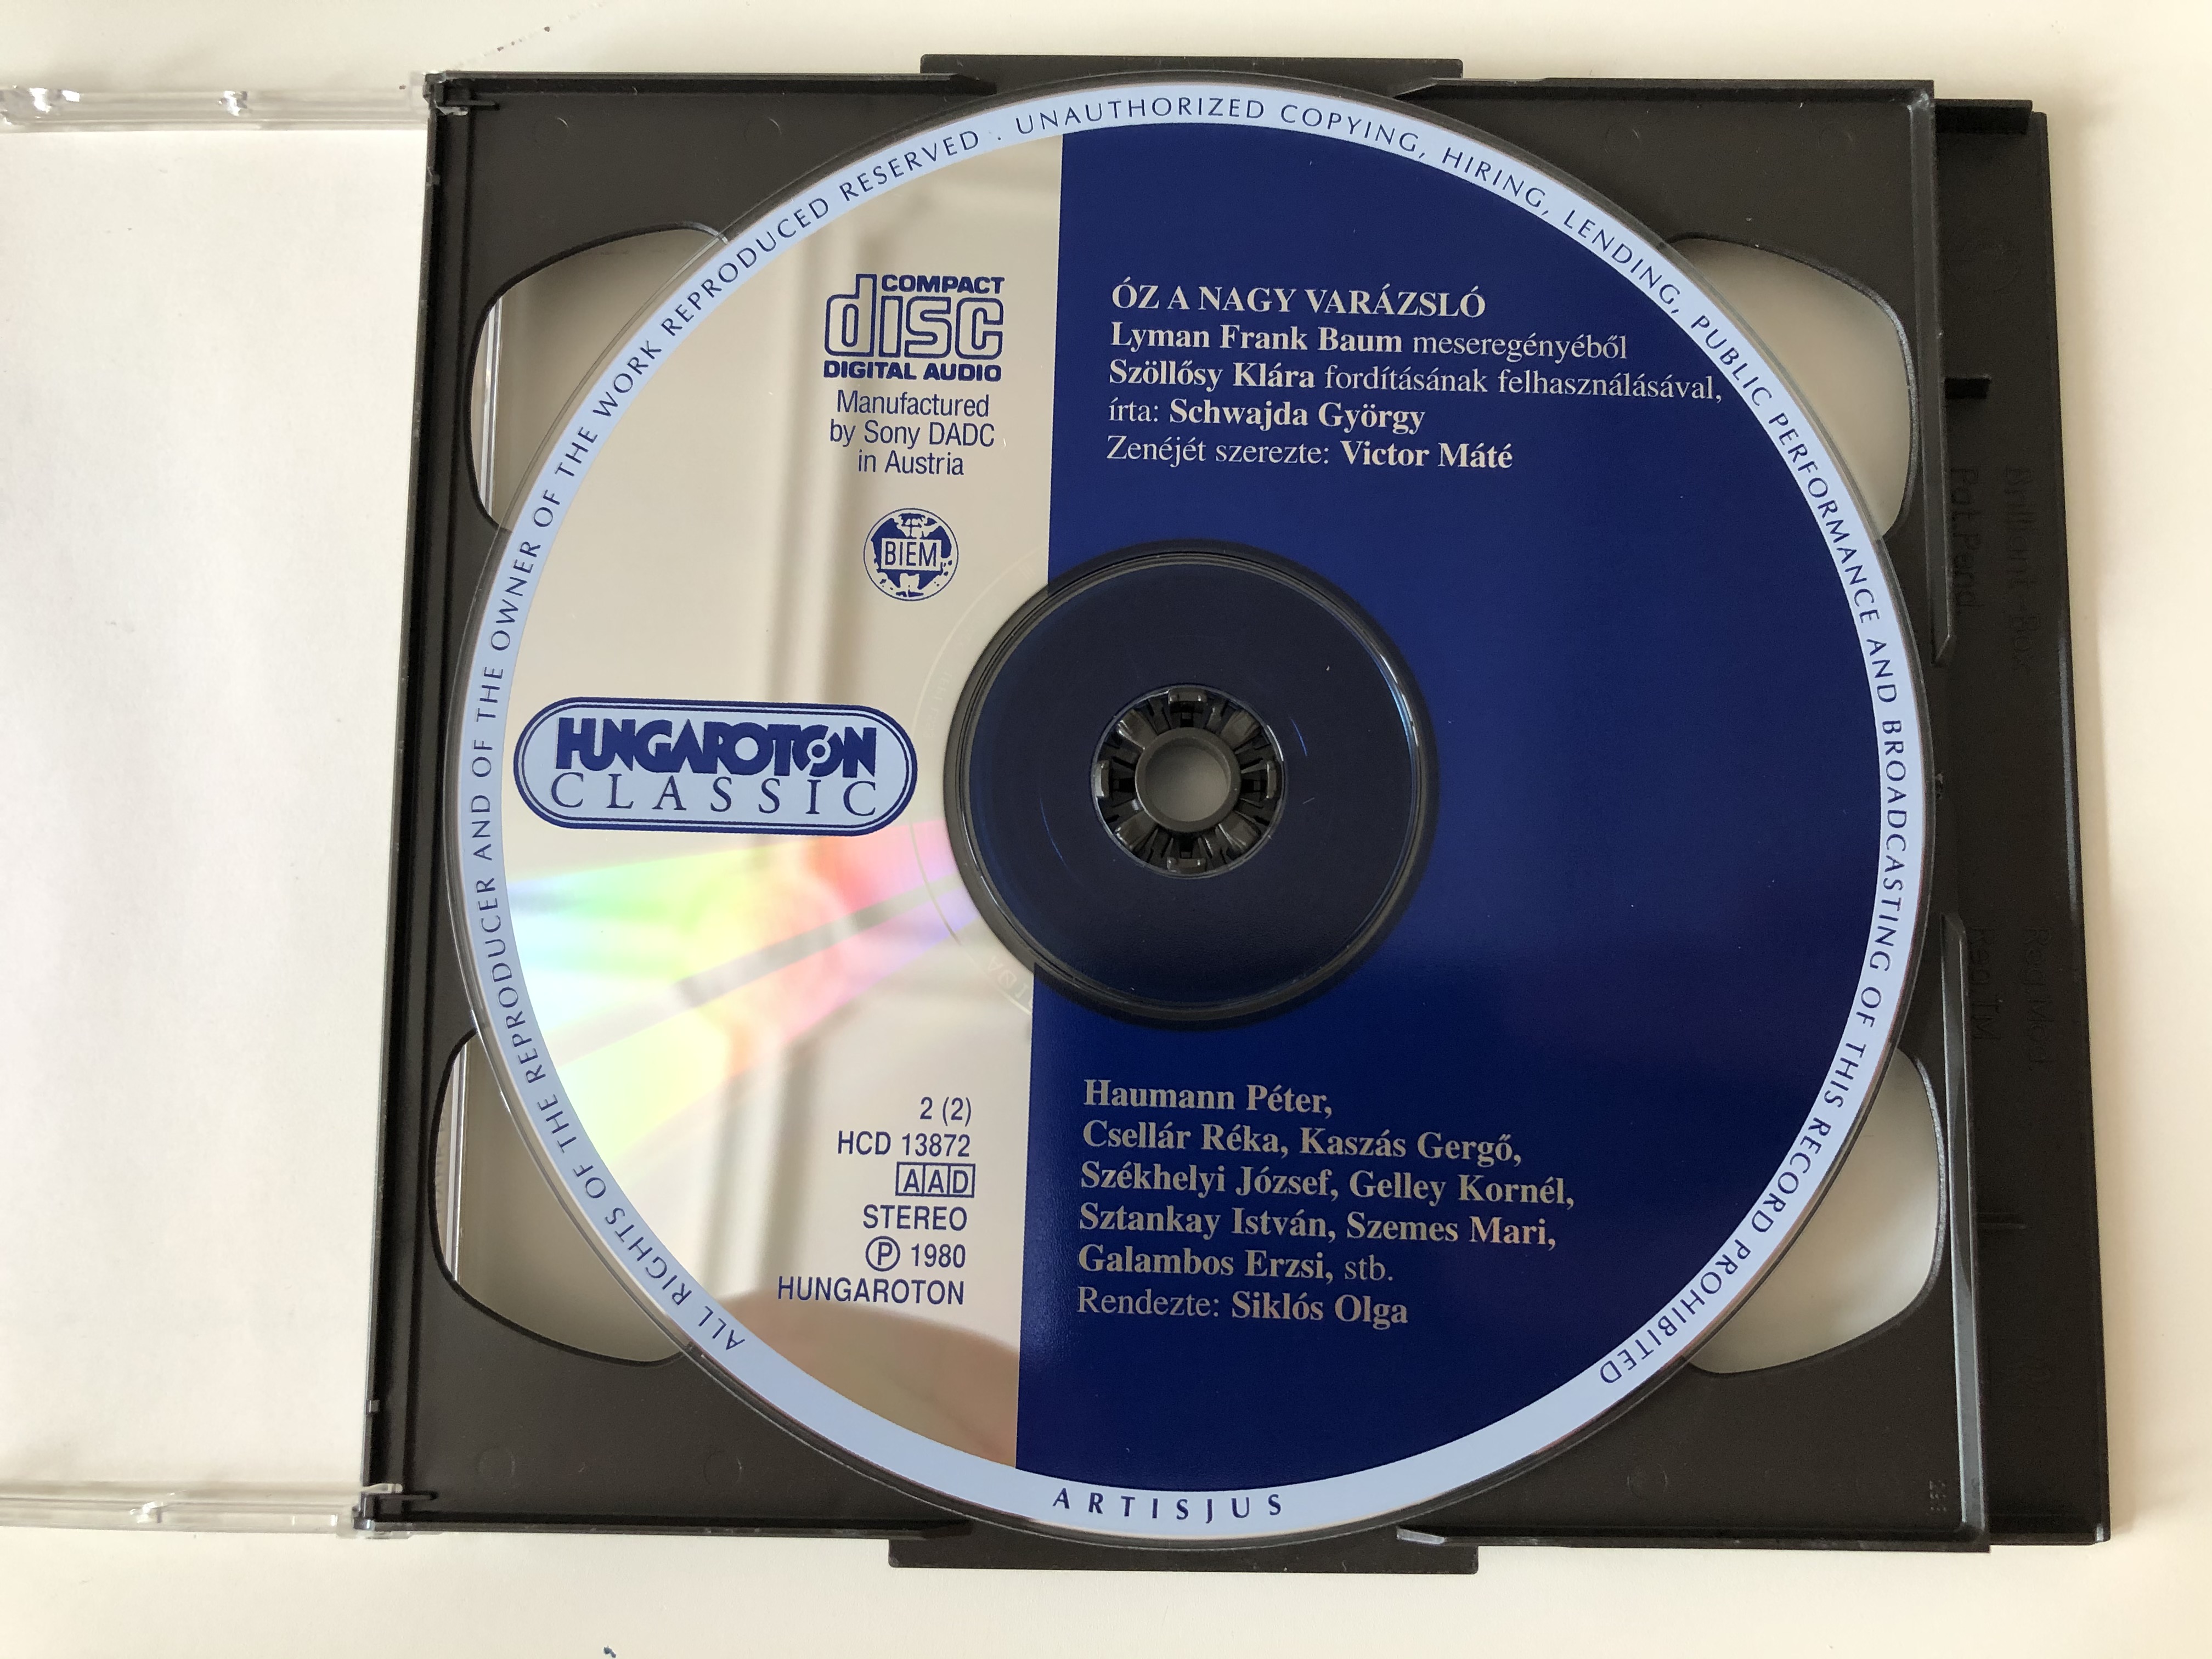 oz-anagy-varazslo-hungaroton-classic-2x-audio-cd-2004-stereo-hcd-13871-72-6-.jpg